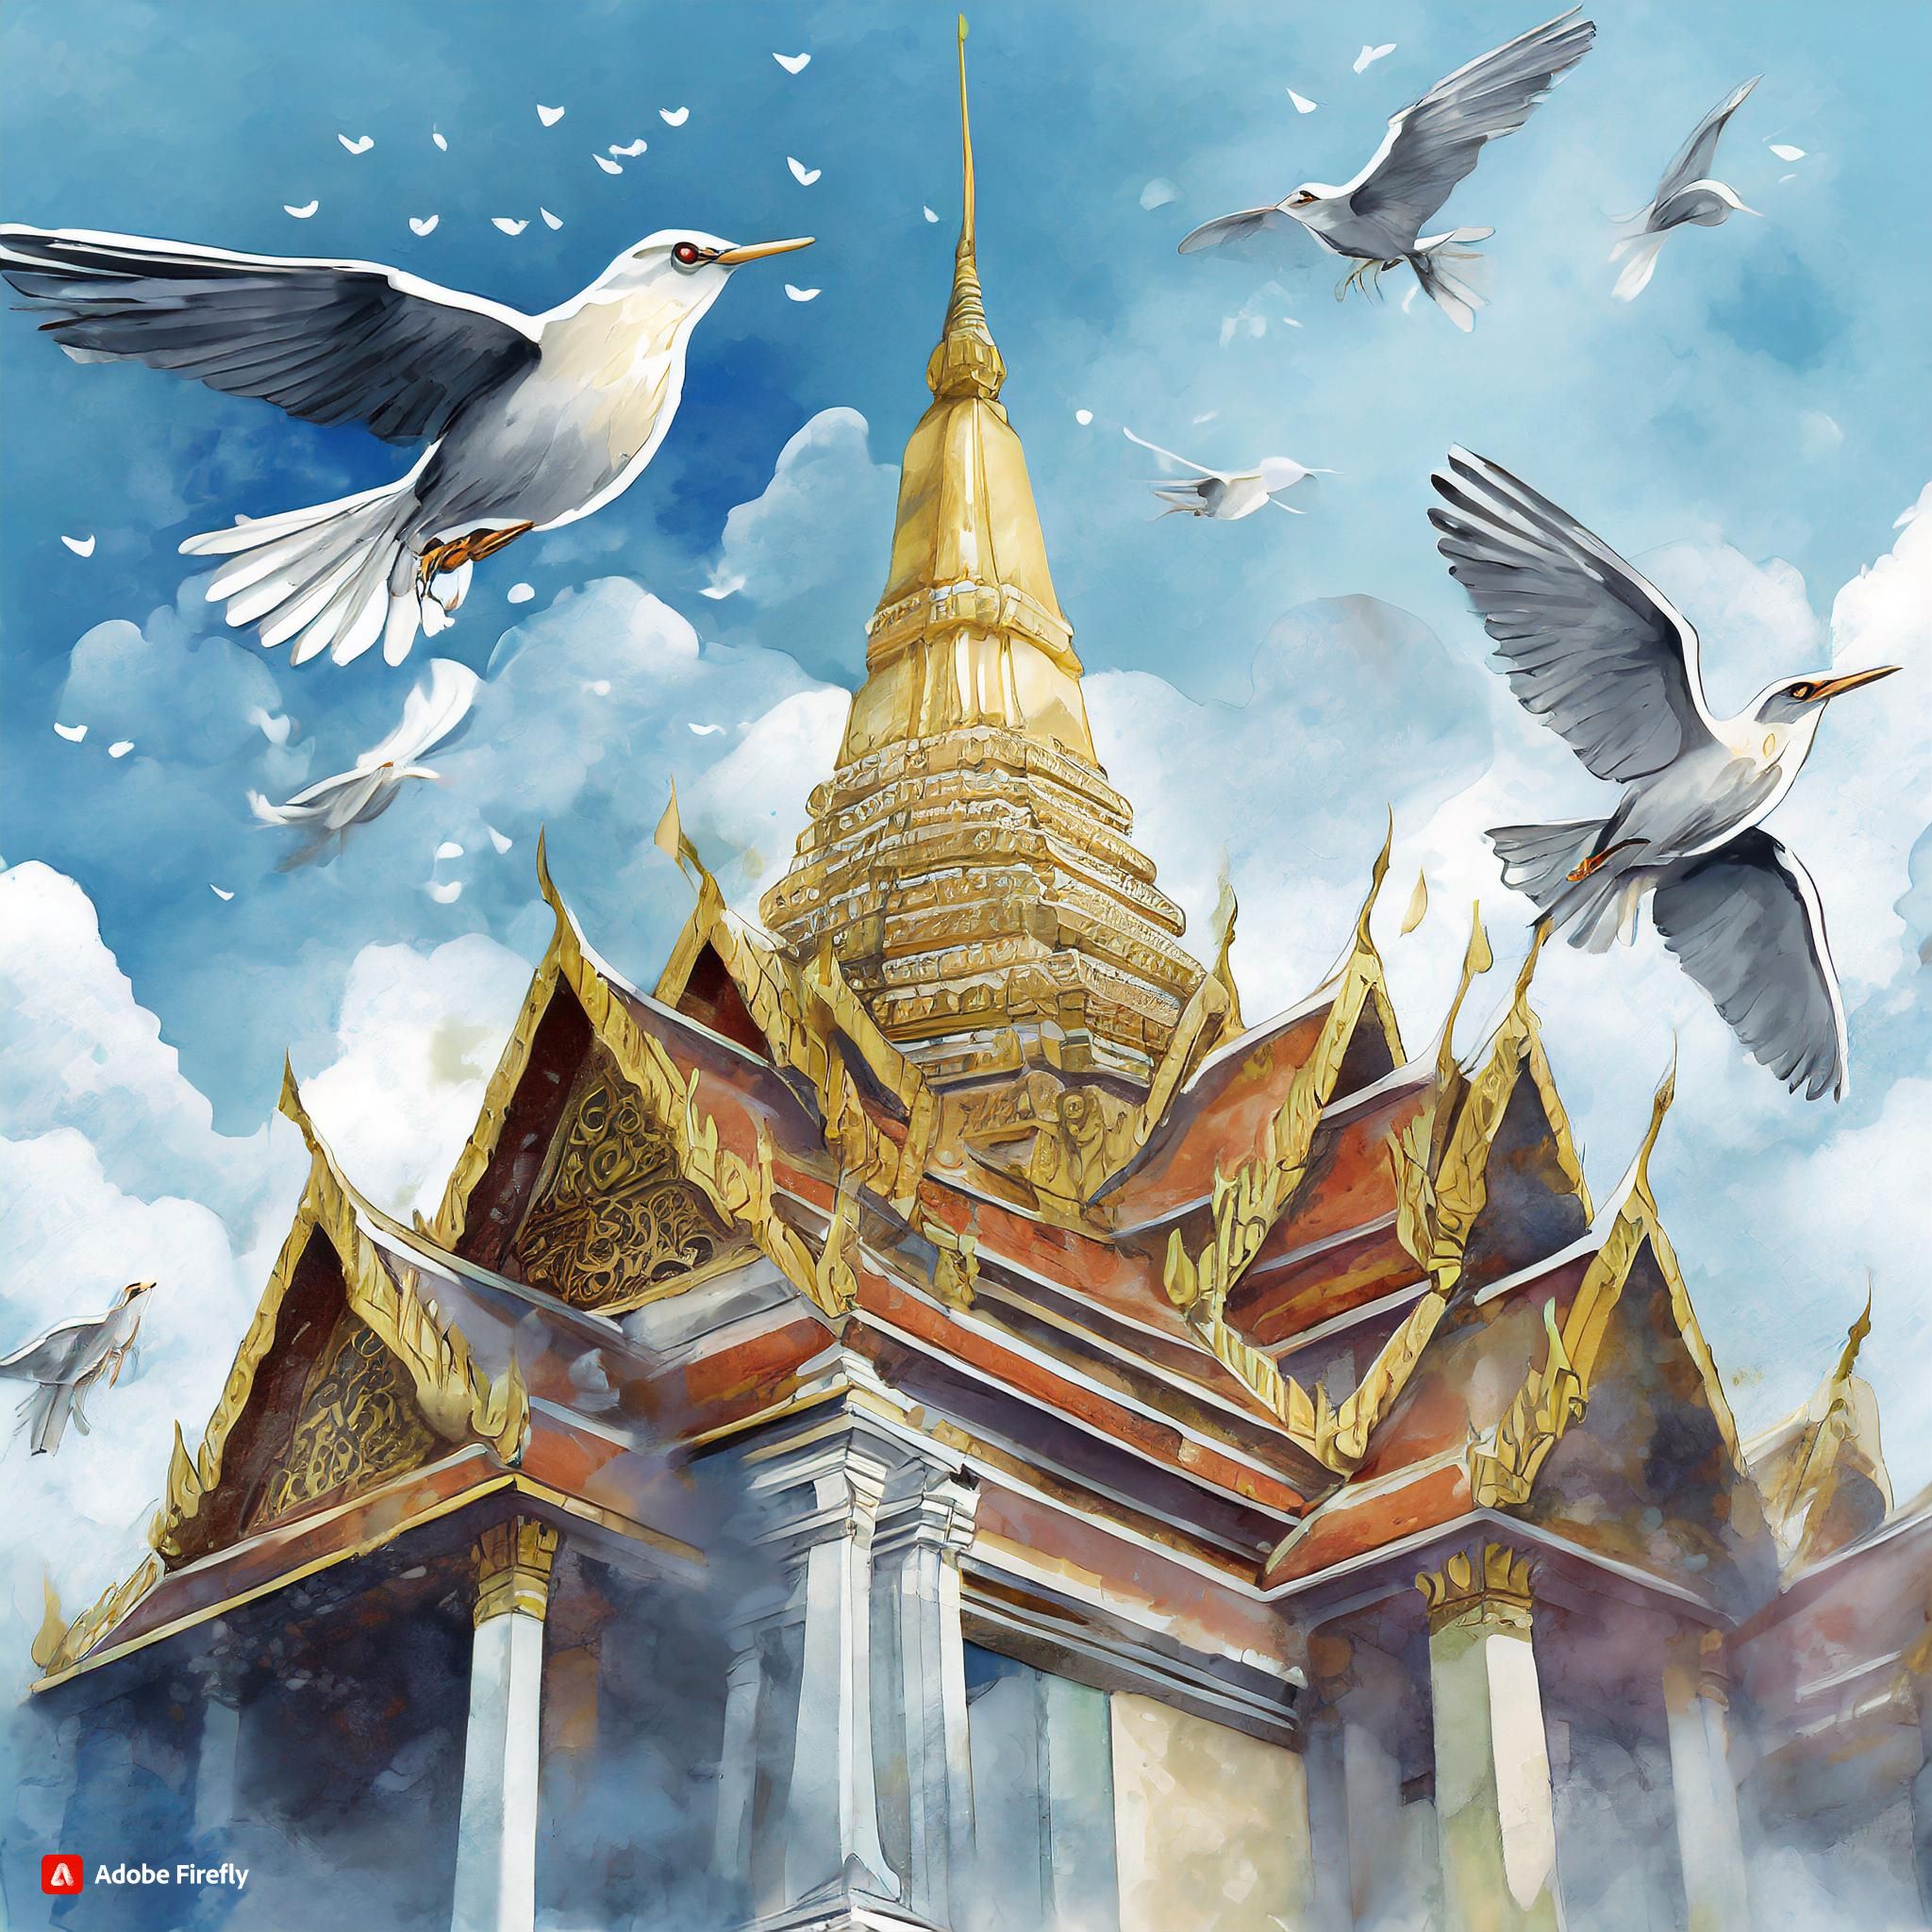  Firefly bangkok thailand temples blue skies birds flying jpg